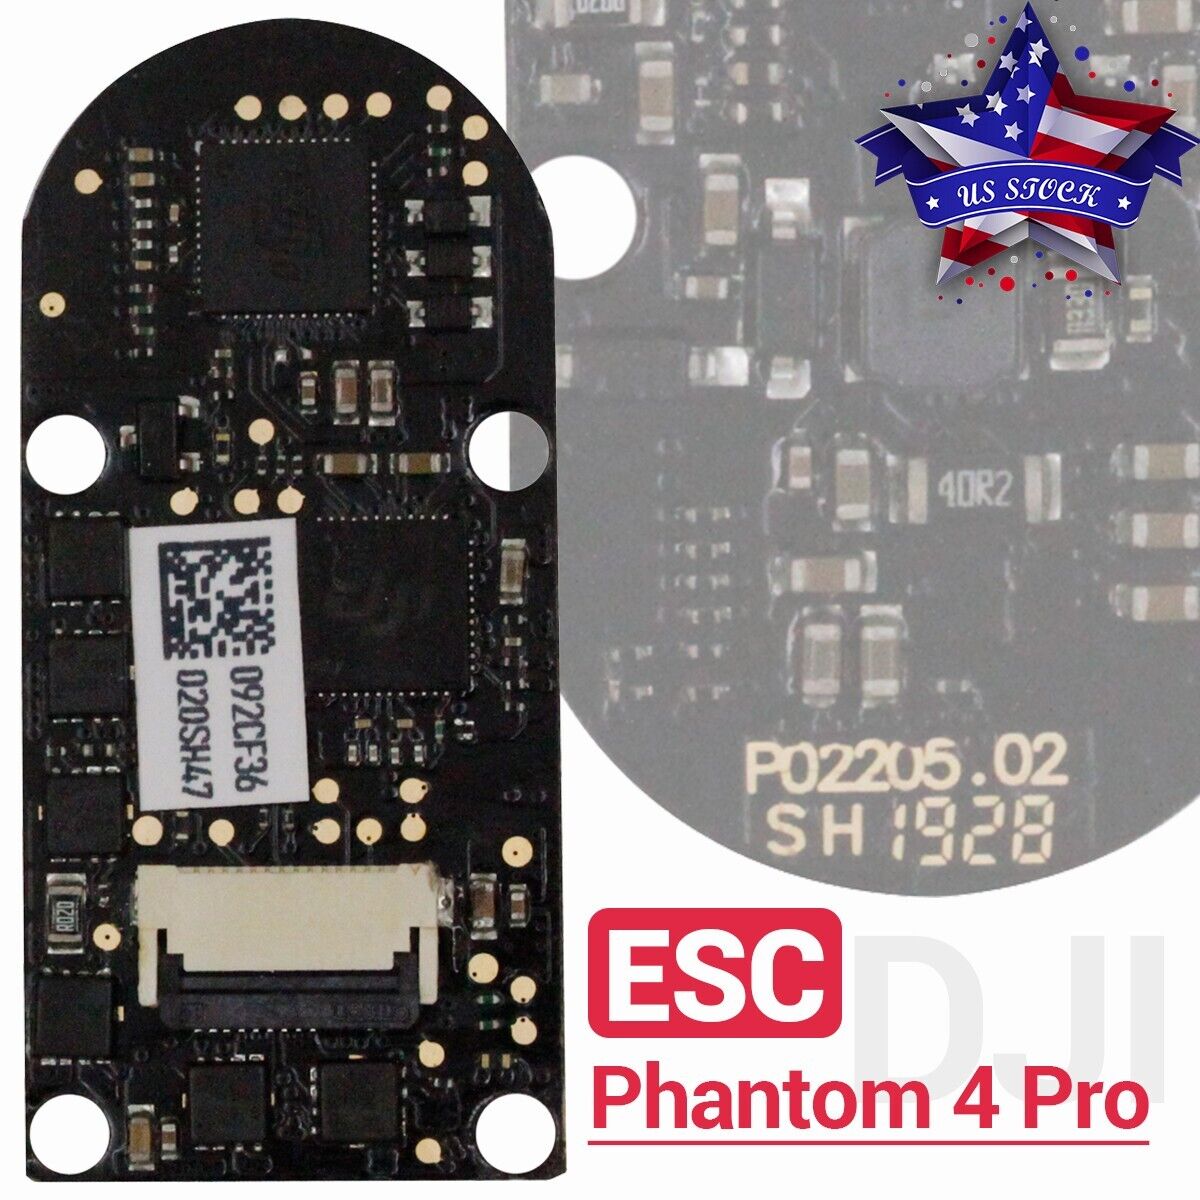 DJI Phantom 4 Pro ESC Circuit Board